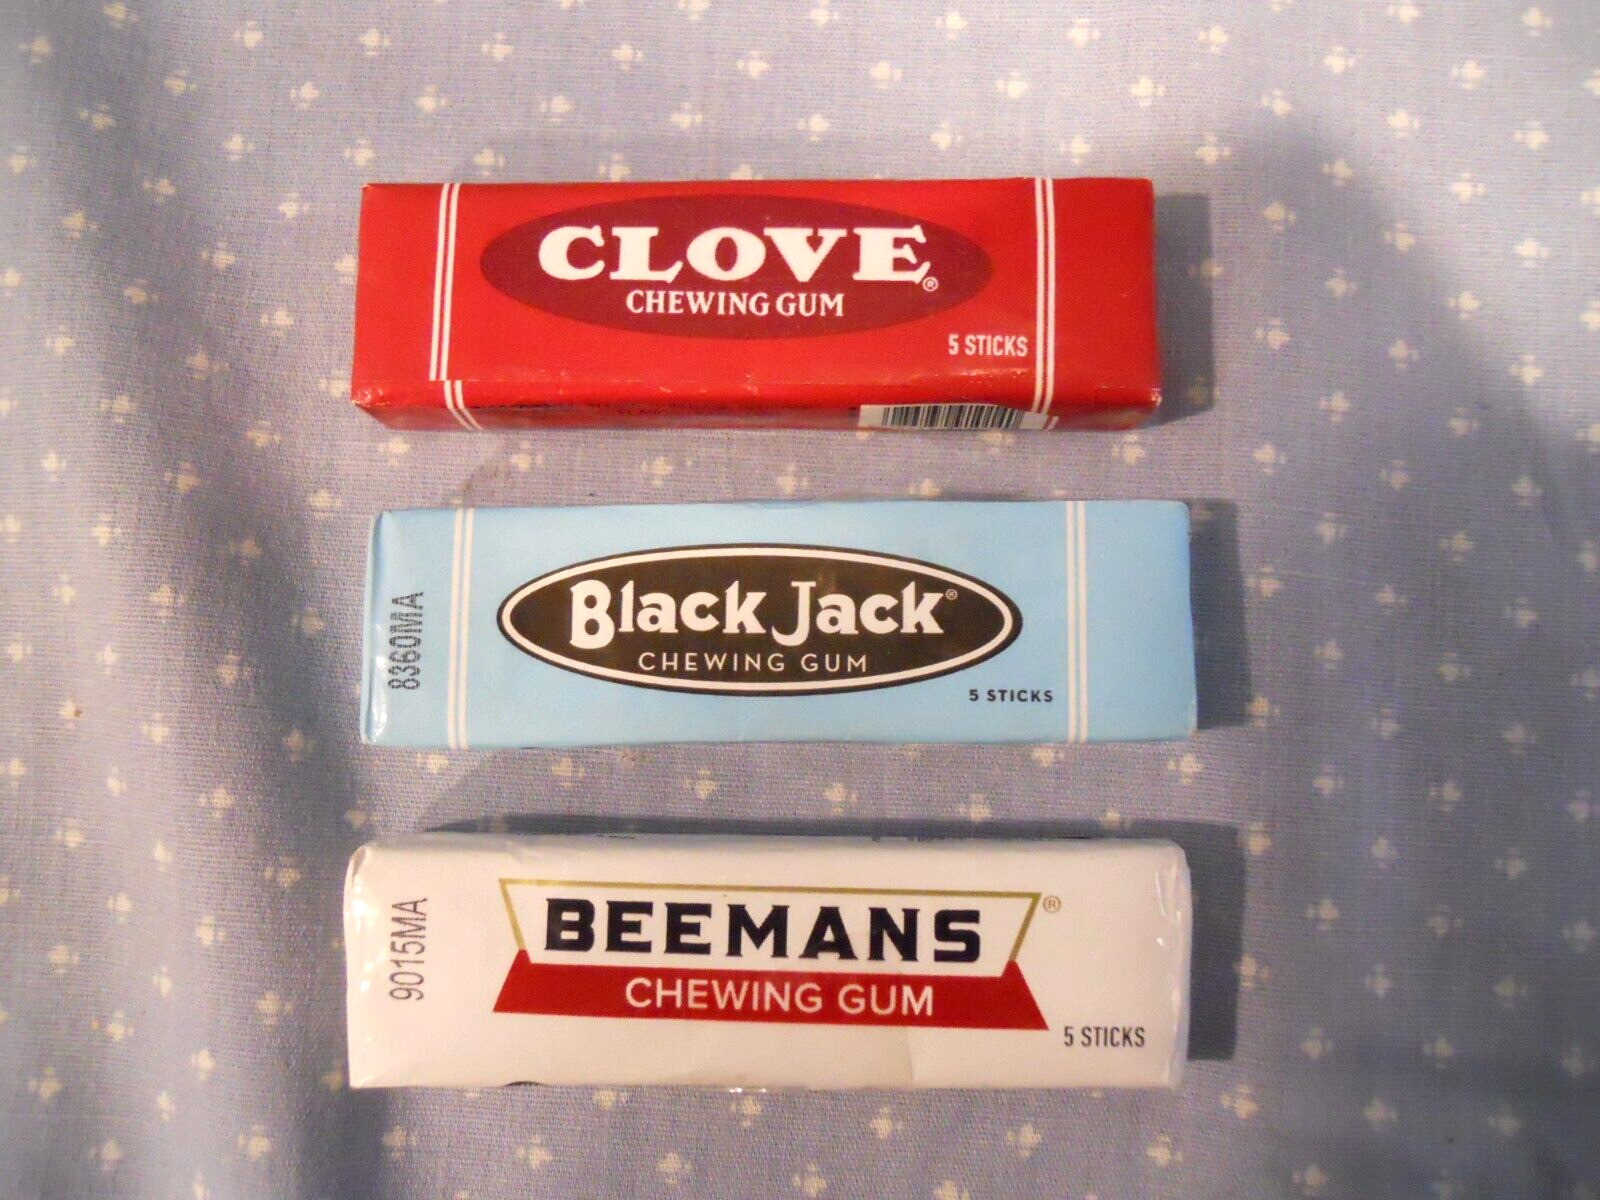 Vintage NIP Chewing Gum ~ Black Jack, Clove, Beemans ~ All Unopened